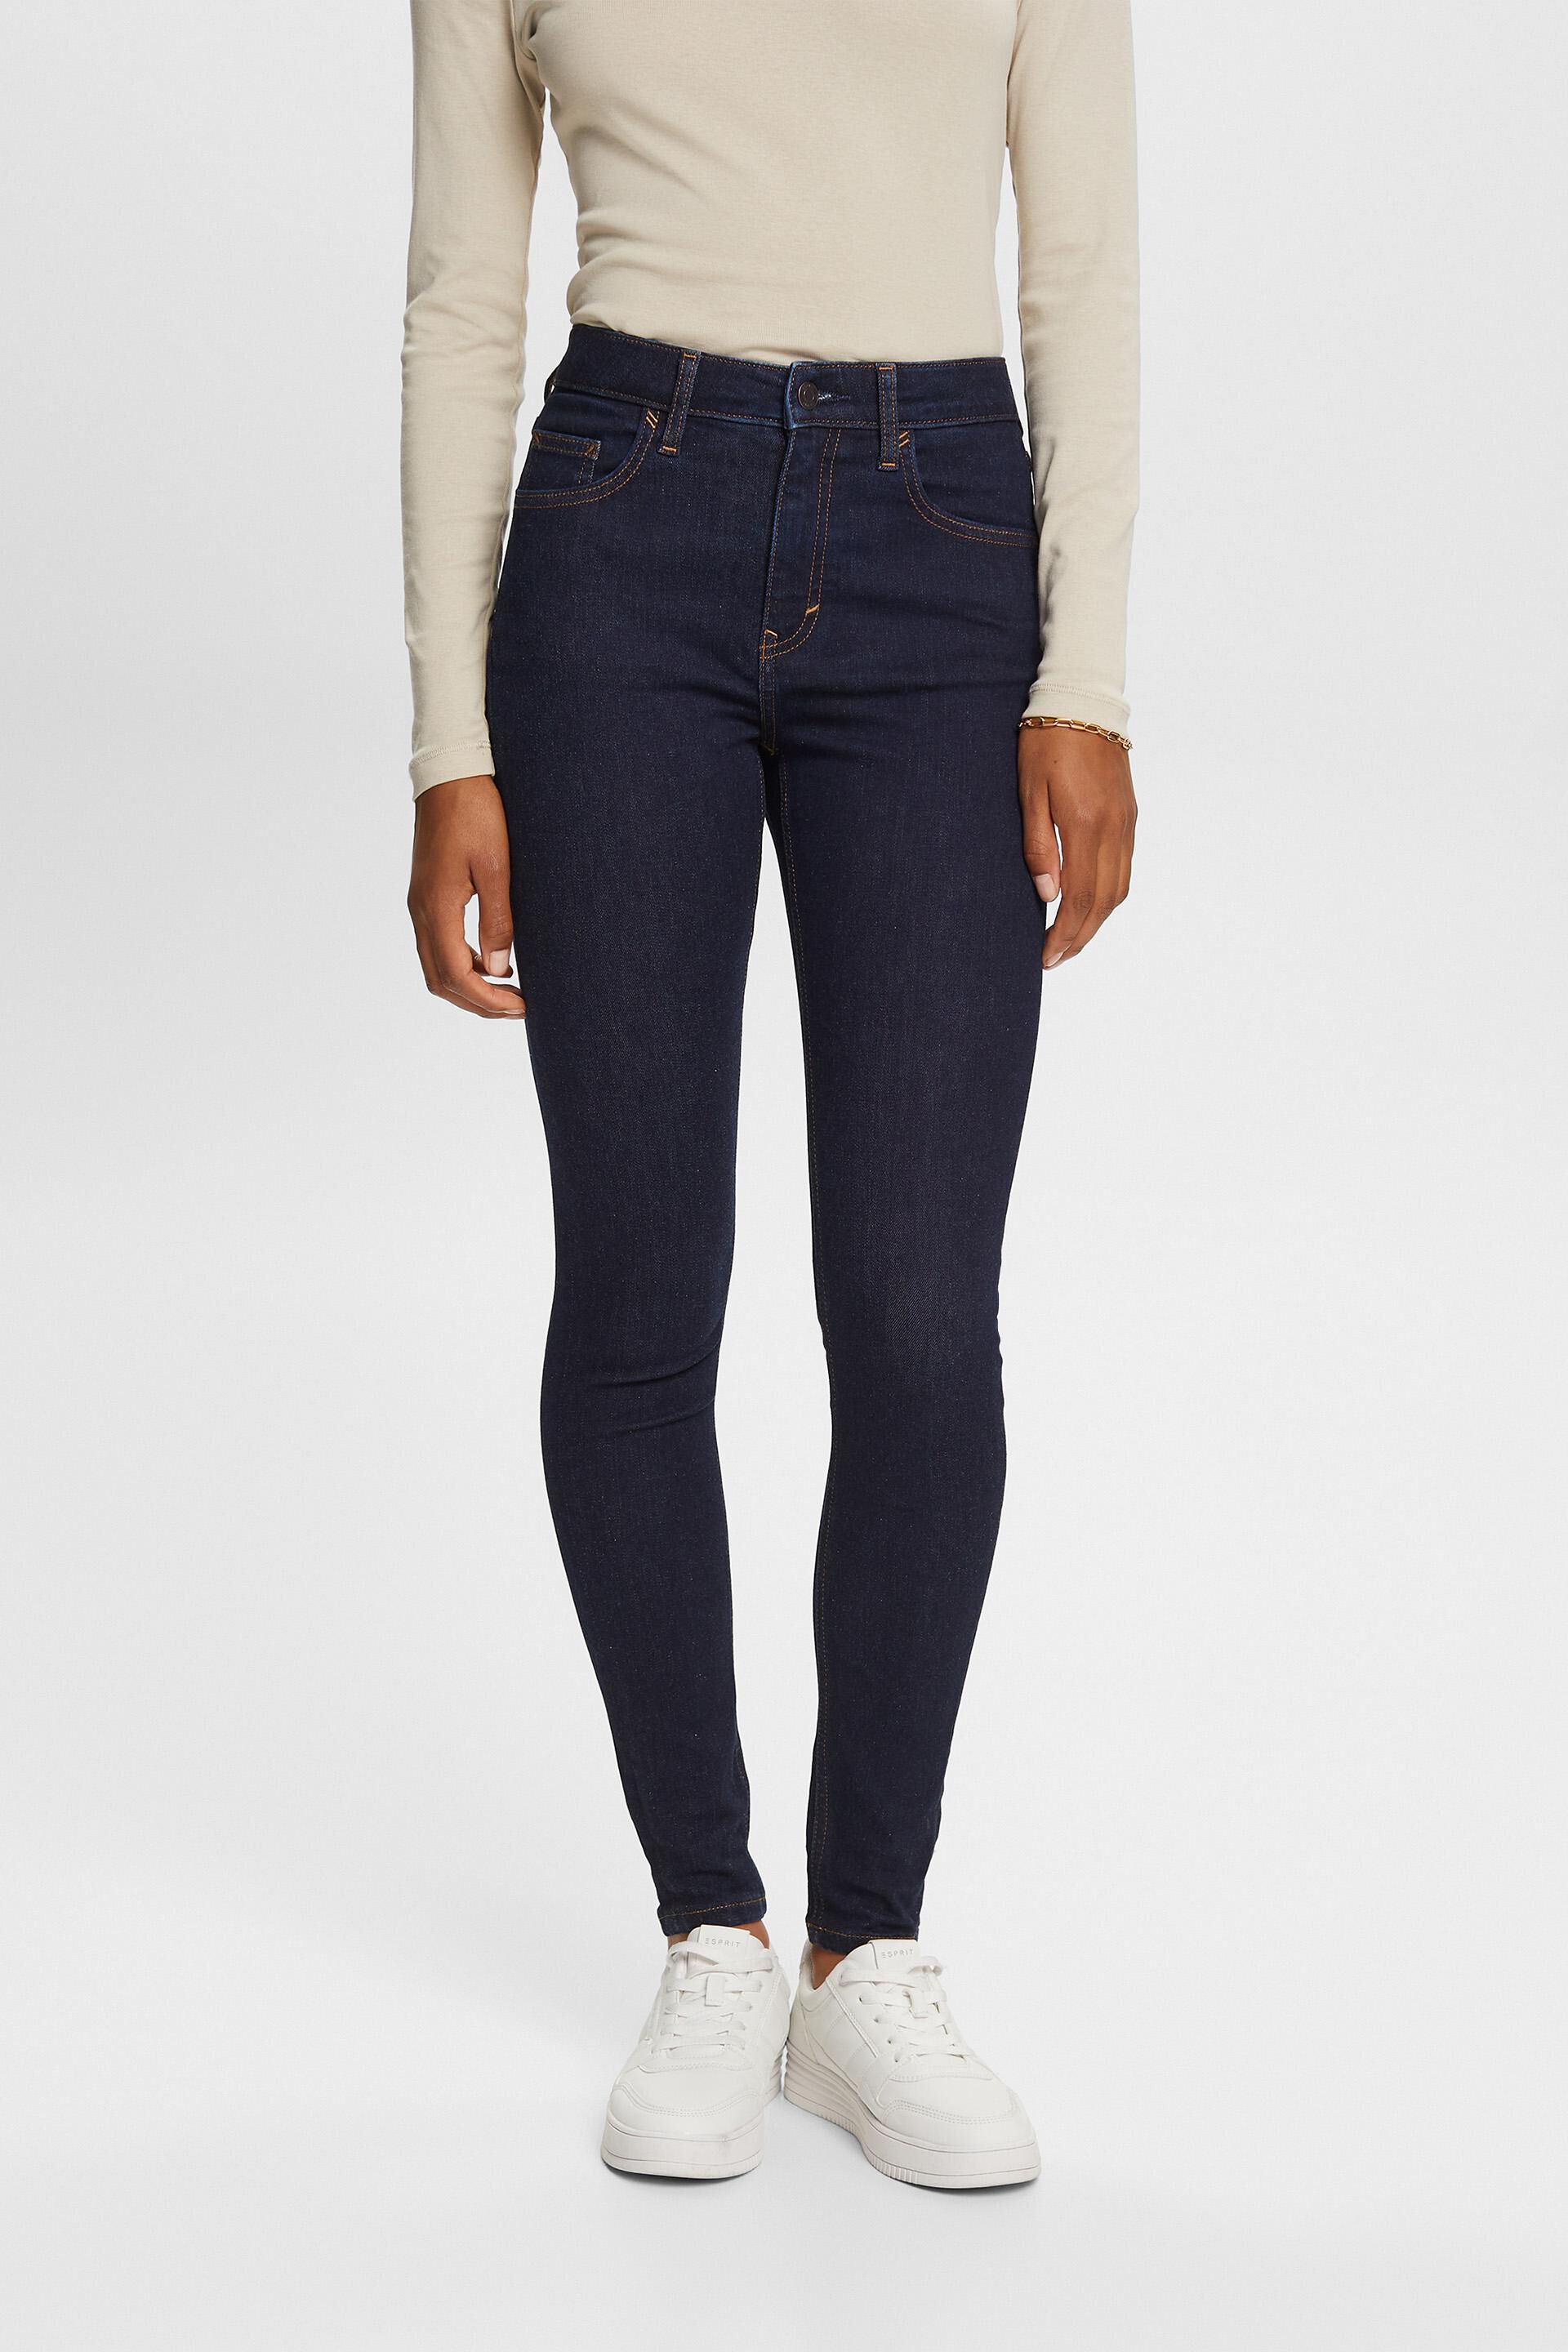 Esprit Damen Highrise skinny jeans, cotton stretch